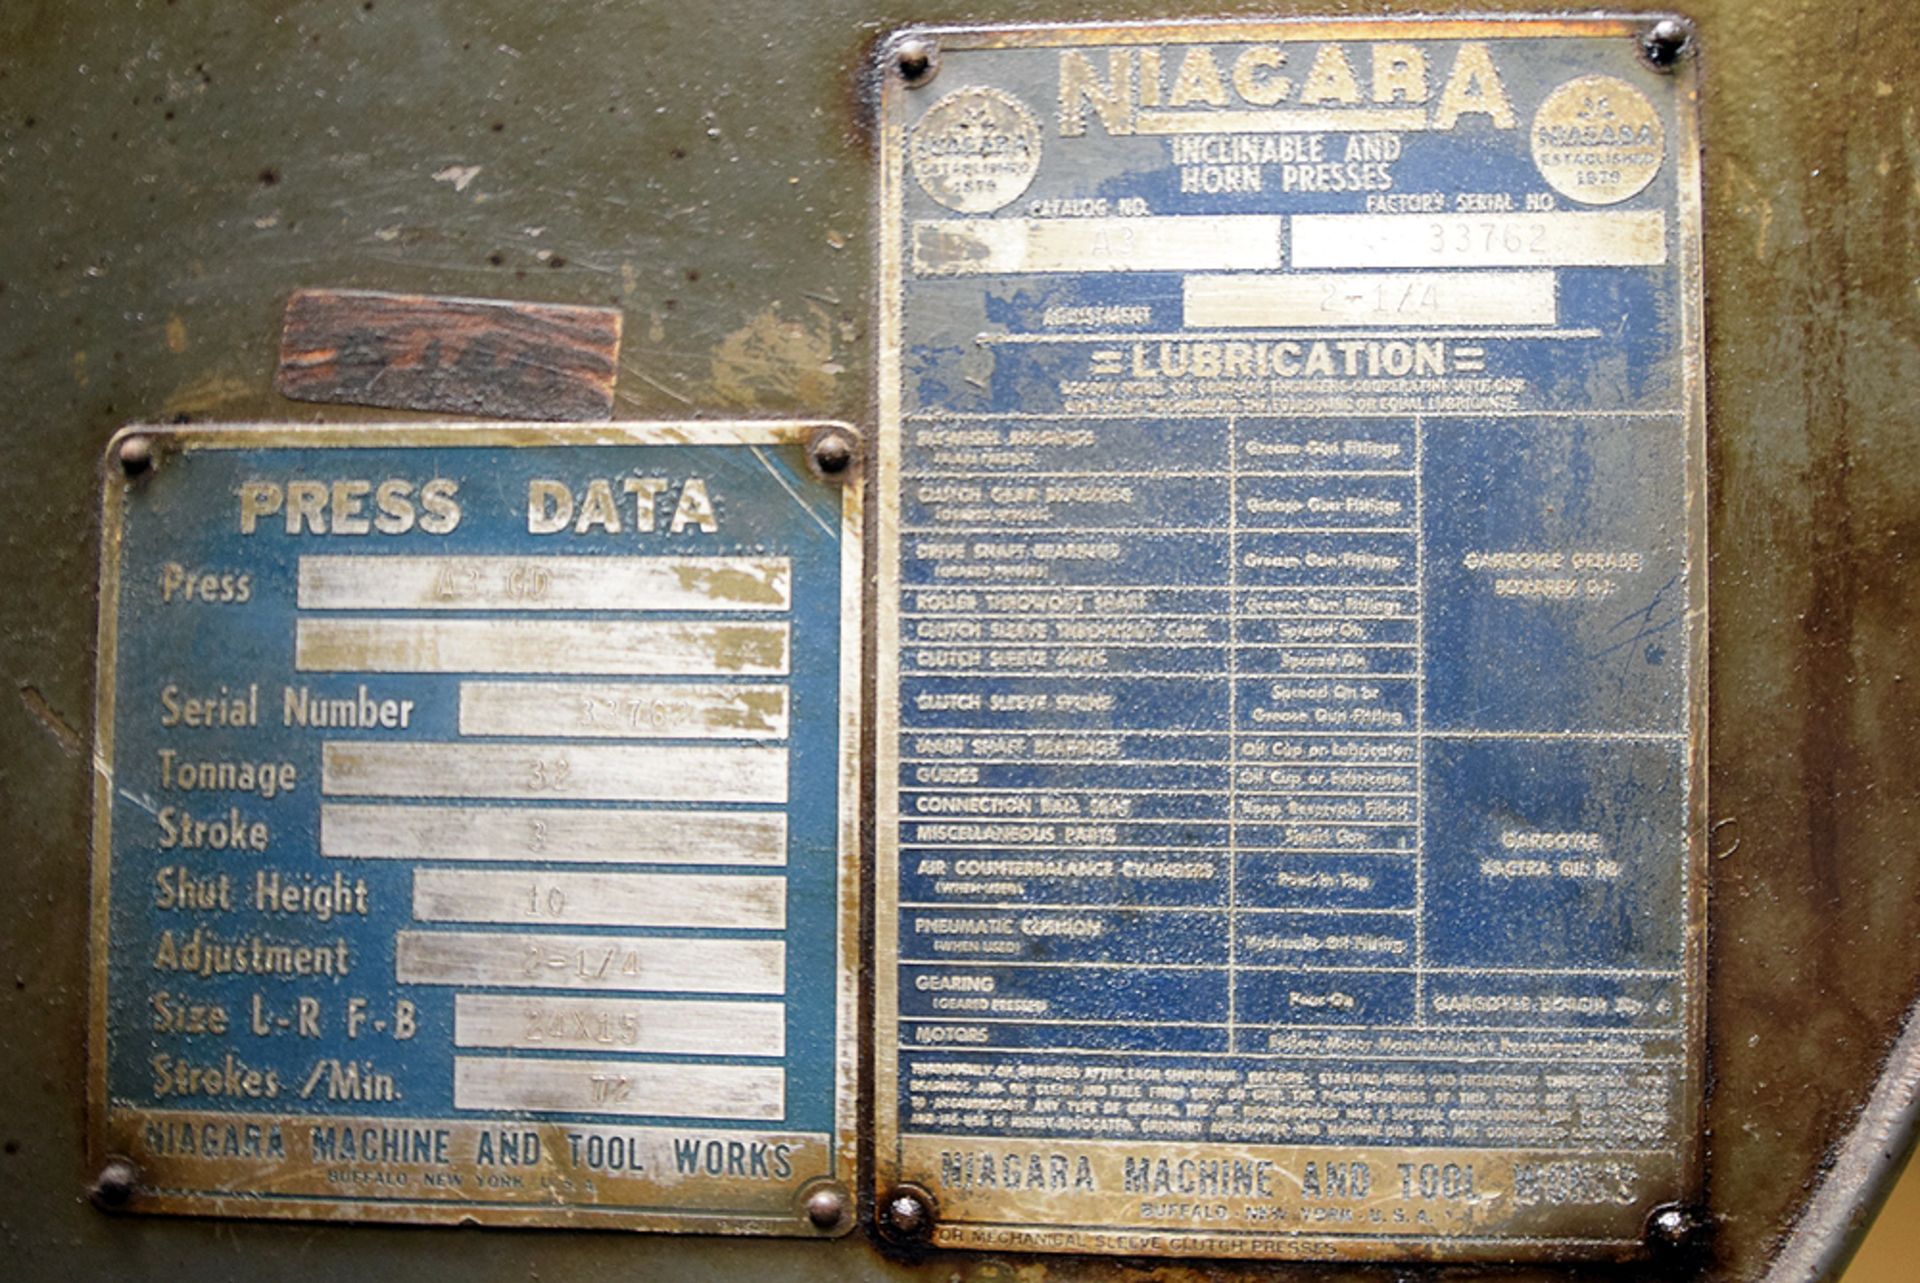 Niagara Model A3, 32 Ton, OBI Punch Press, 2-1/2" Stroke - Image 3 of 4